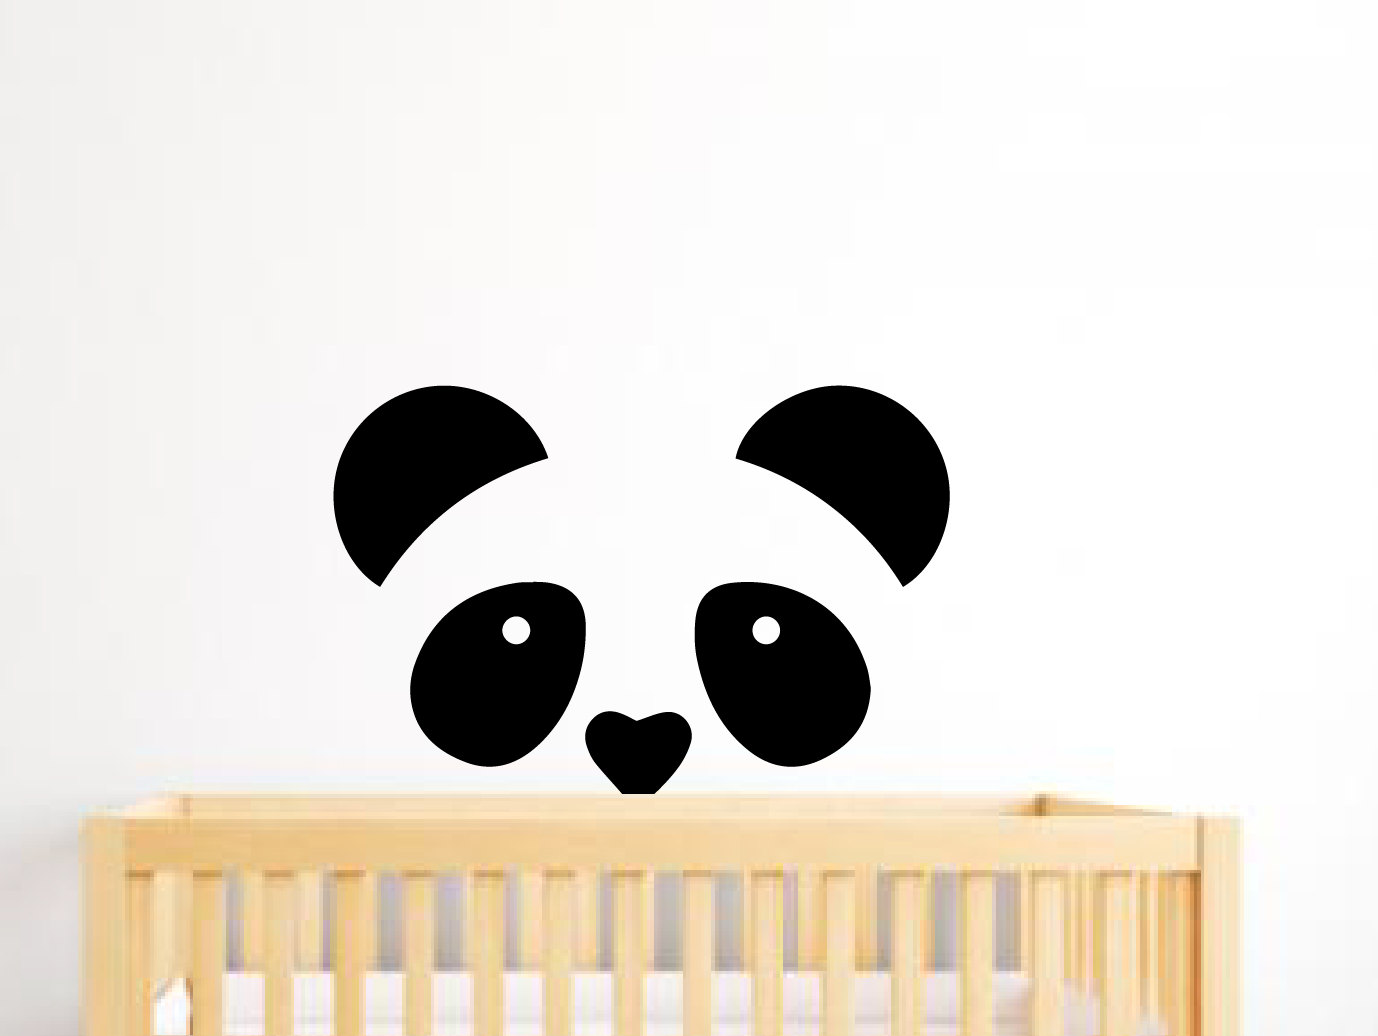 Panda Nursery Wall Sticker